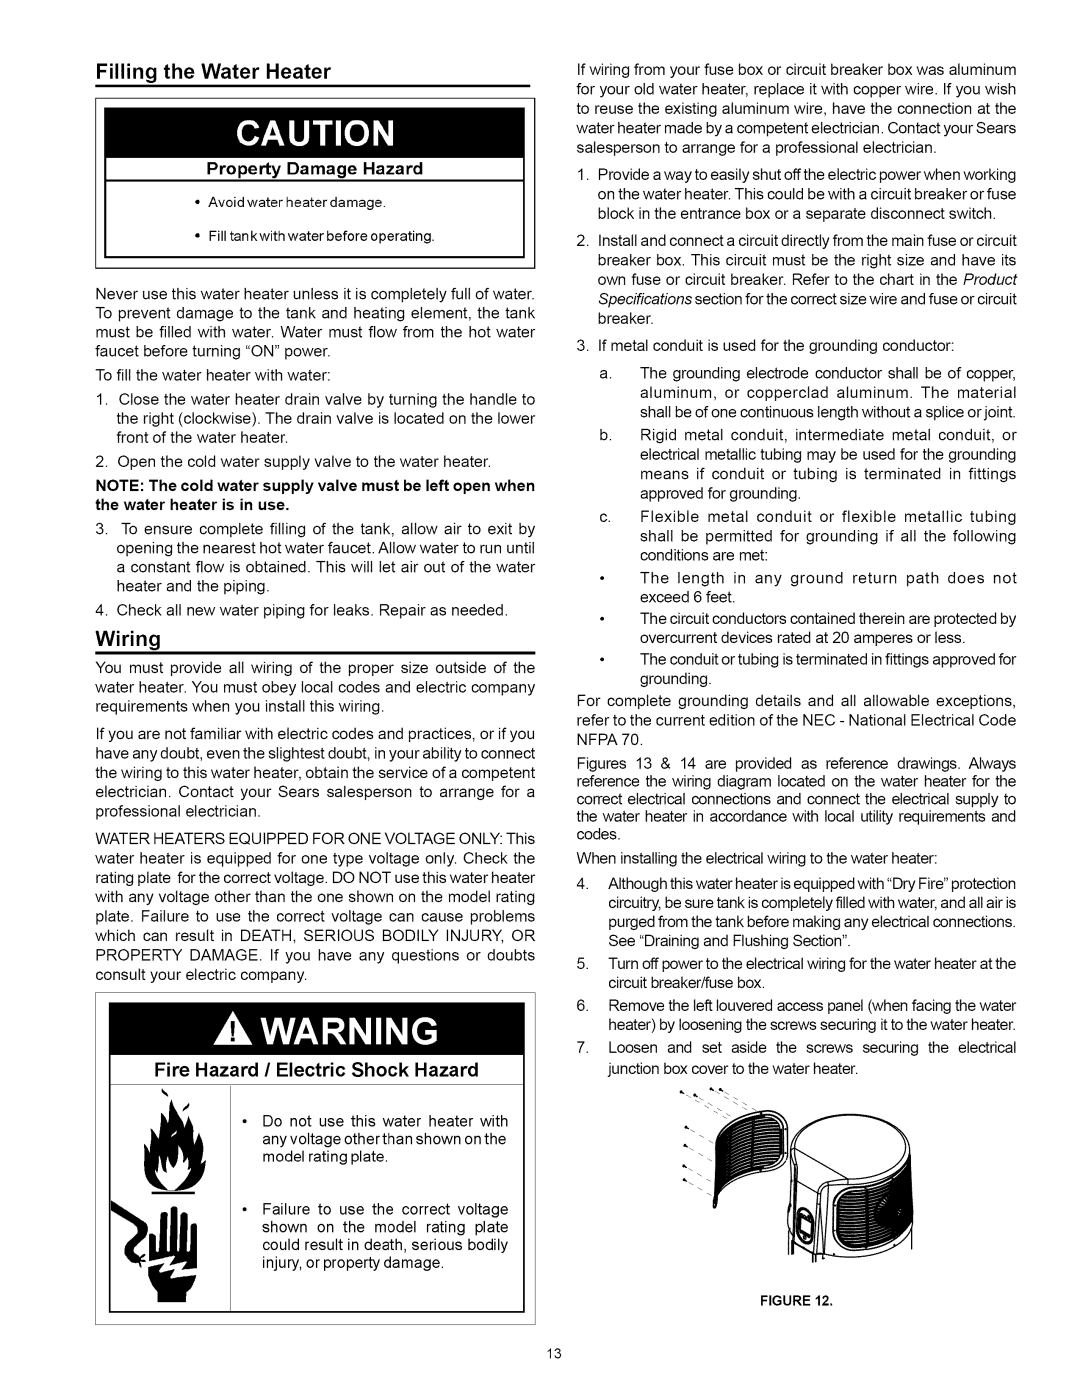 Kenmore 153.32116, 153.32118 manual Filling the Water Heater, Wiring, Fire Hazard / Electric Shock Hazard 